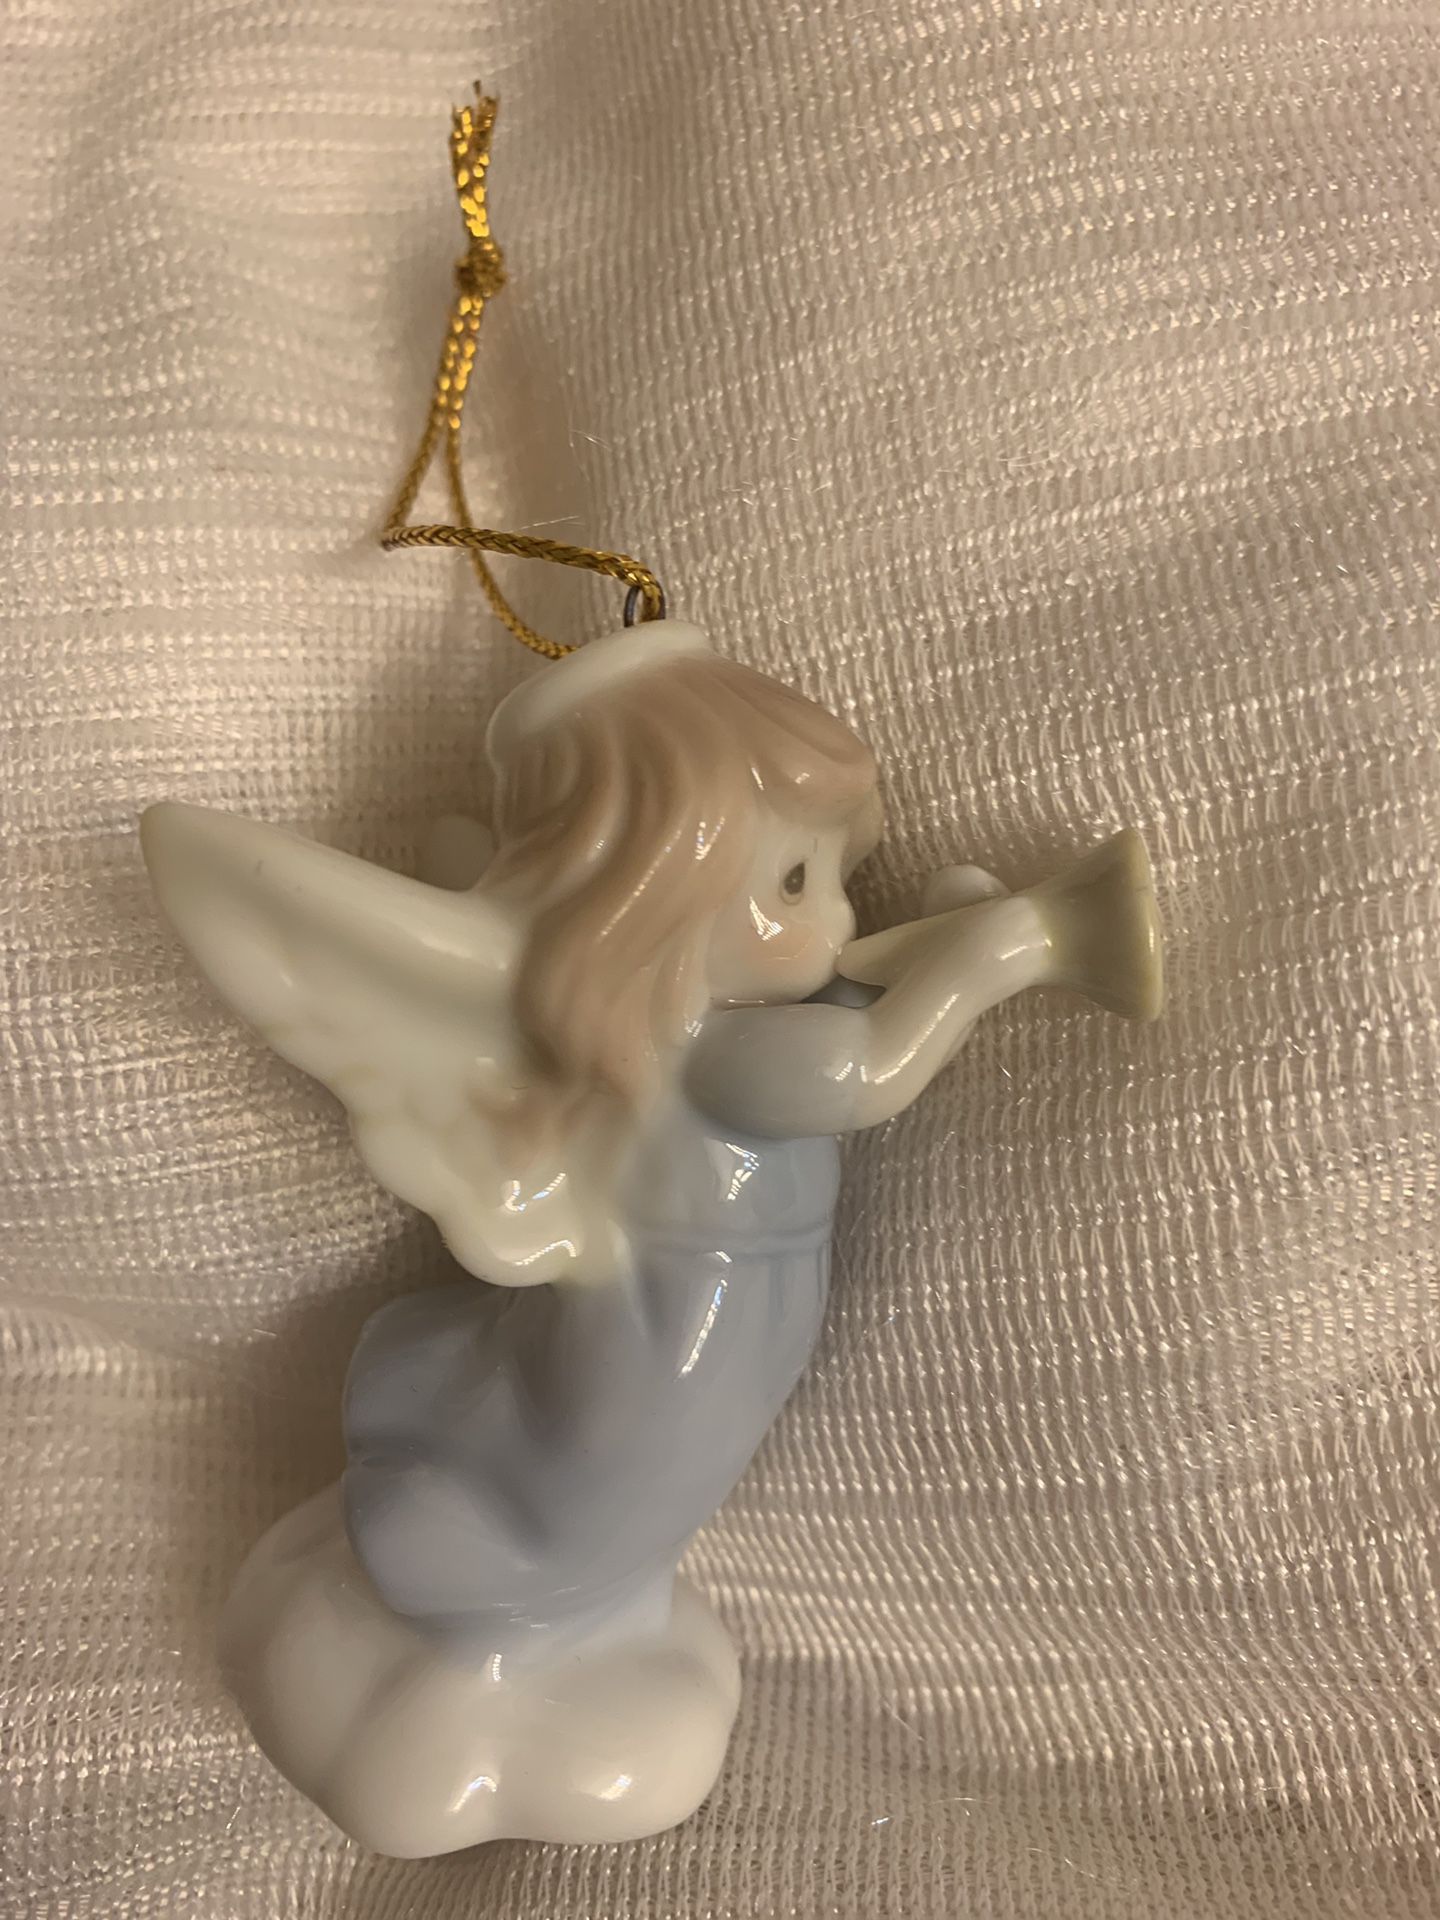 1996 Joy To The World Precious Moments Angel Ornament